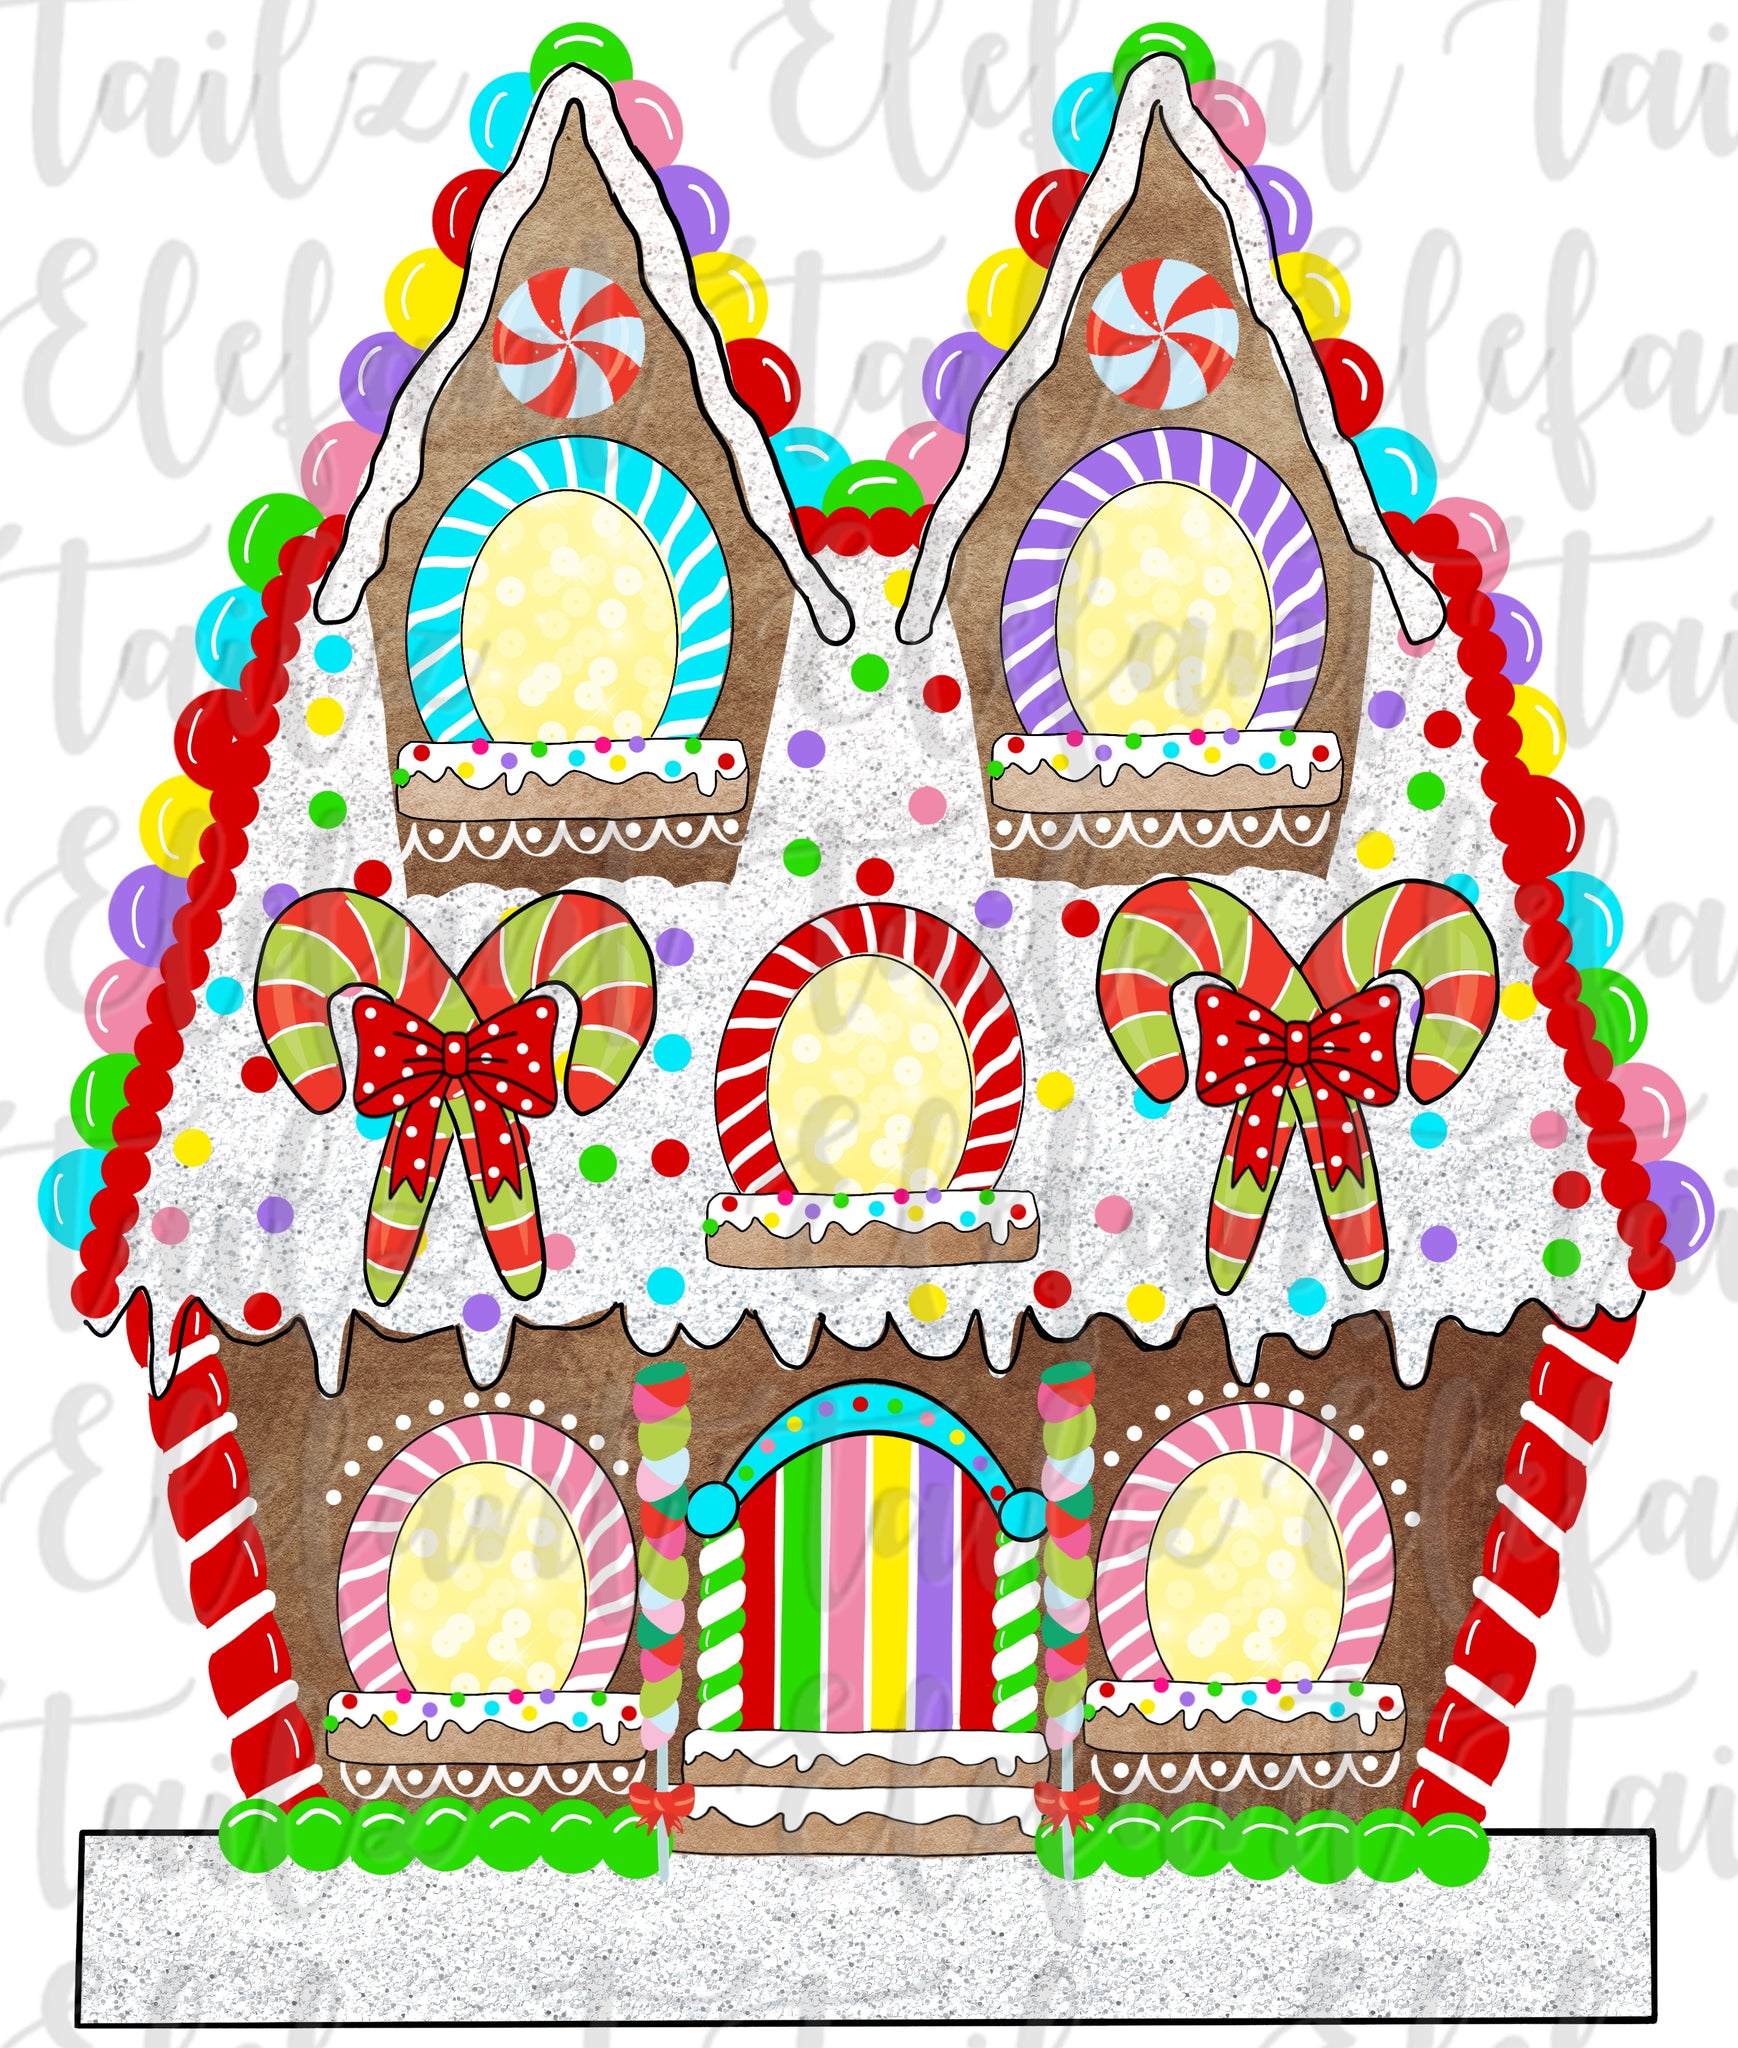 Gingerbread House 5 Windows - Blank